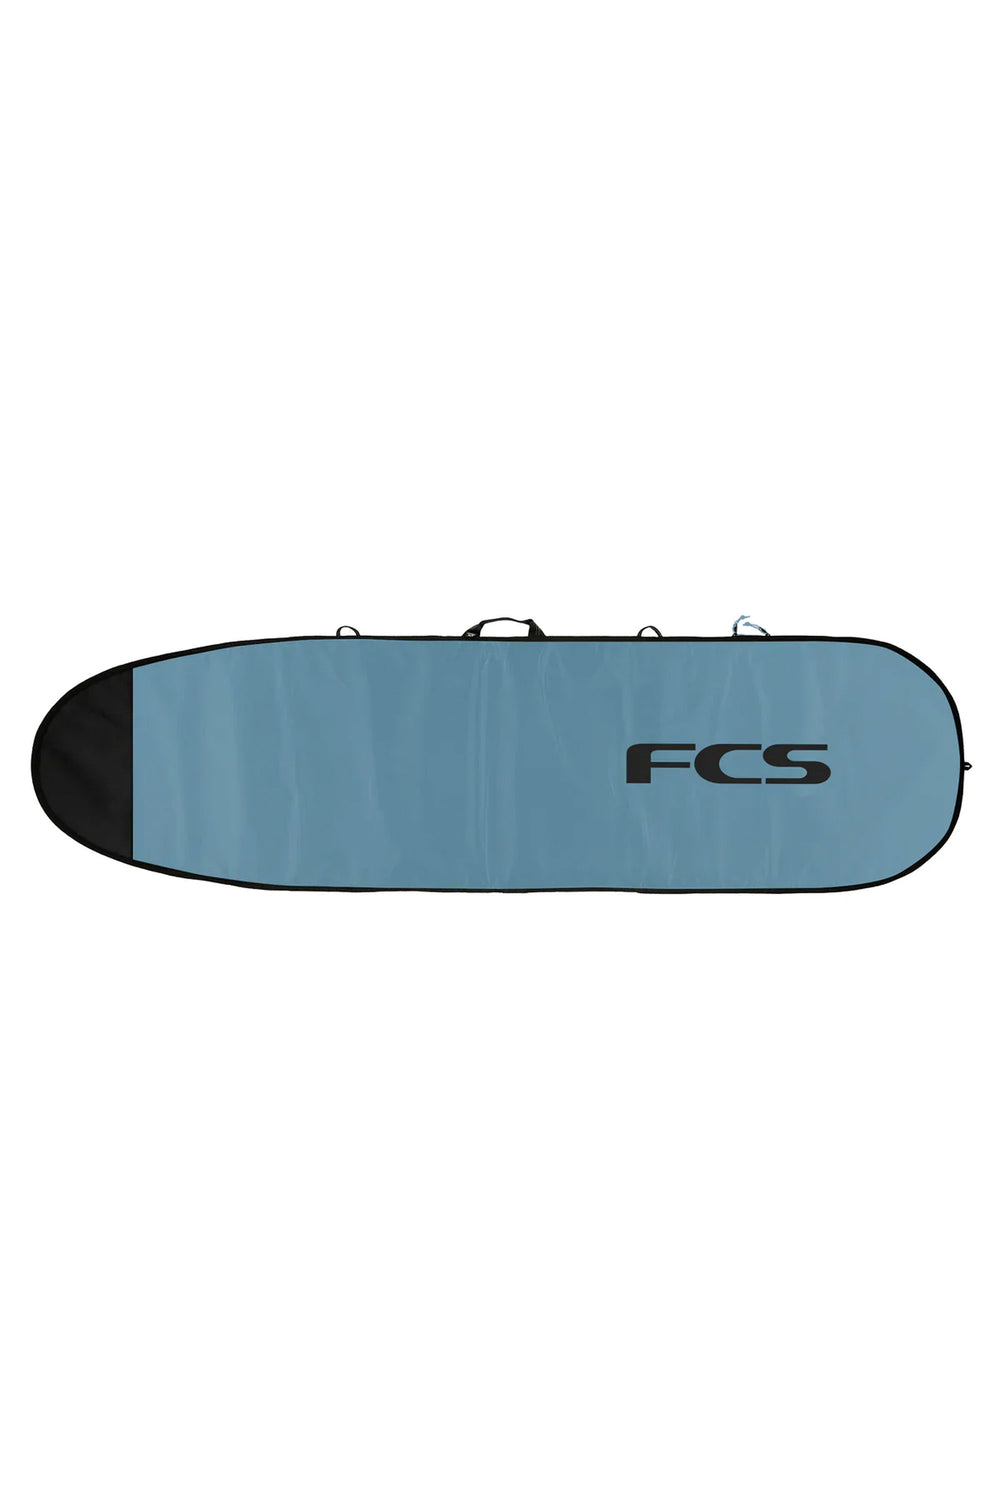 PUKAS-SURF-SHOP-BOARDBAG-FCS-CLASSIC-FUN-8'6